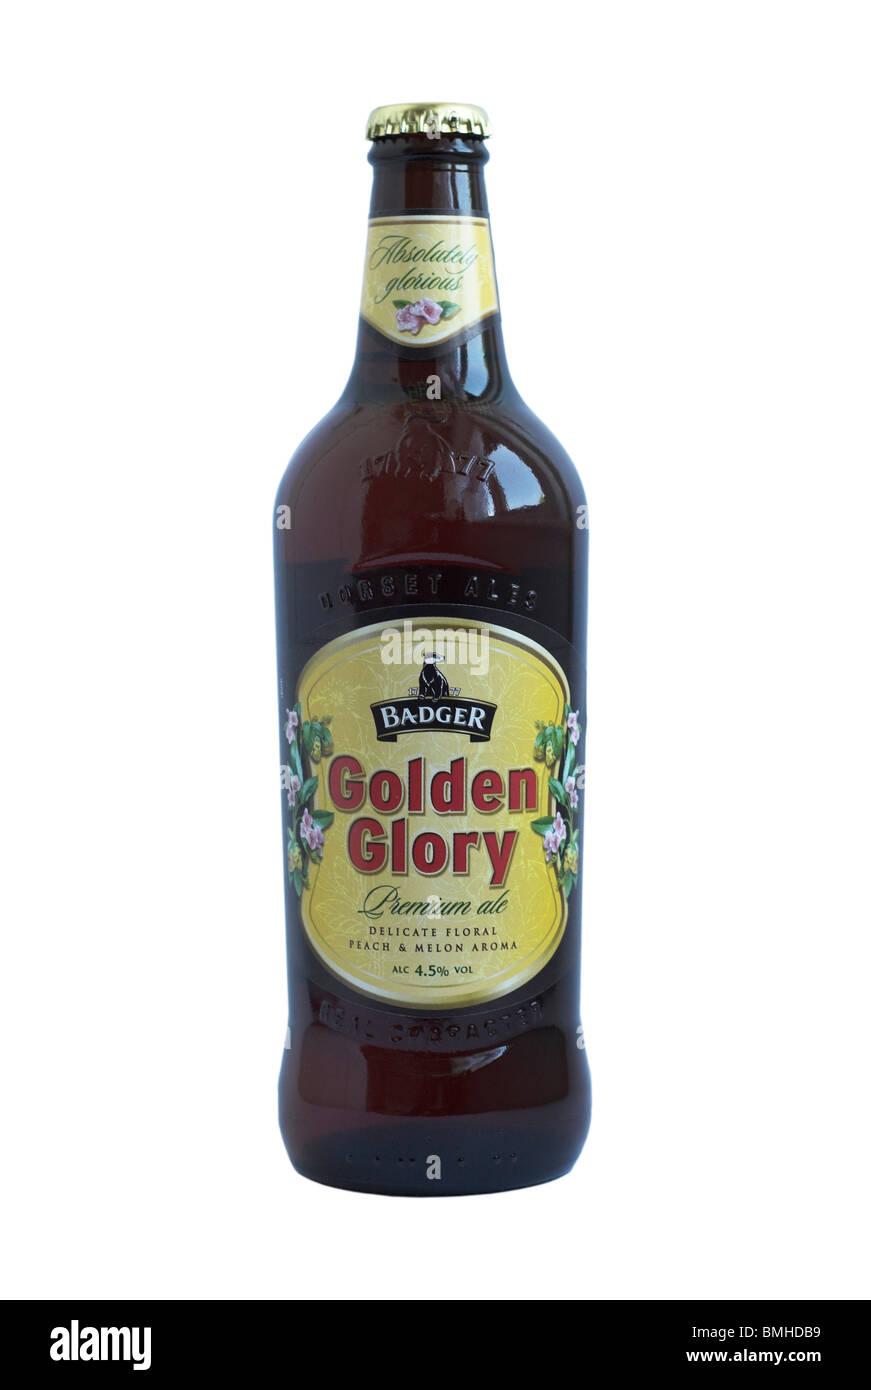 Hall & Woodhouse (Badger) Golden Glory Bottled Beer - 2010. Stock Photo